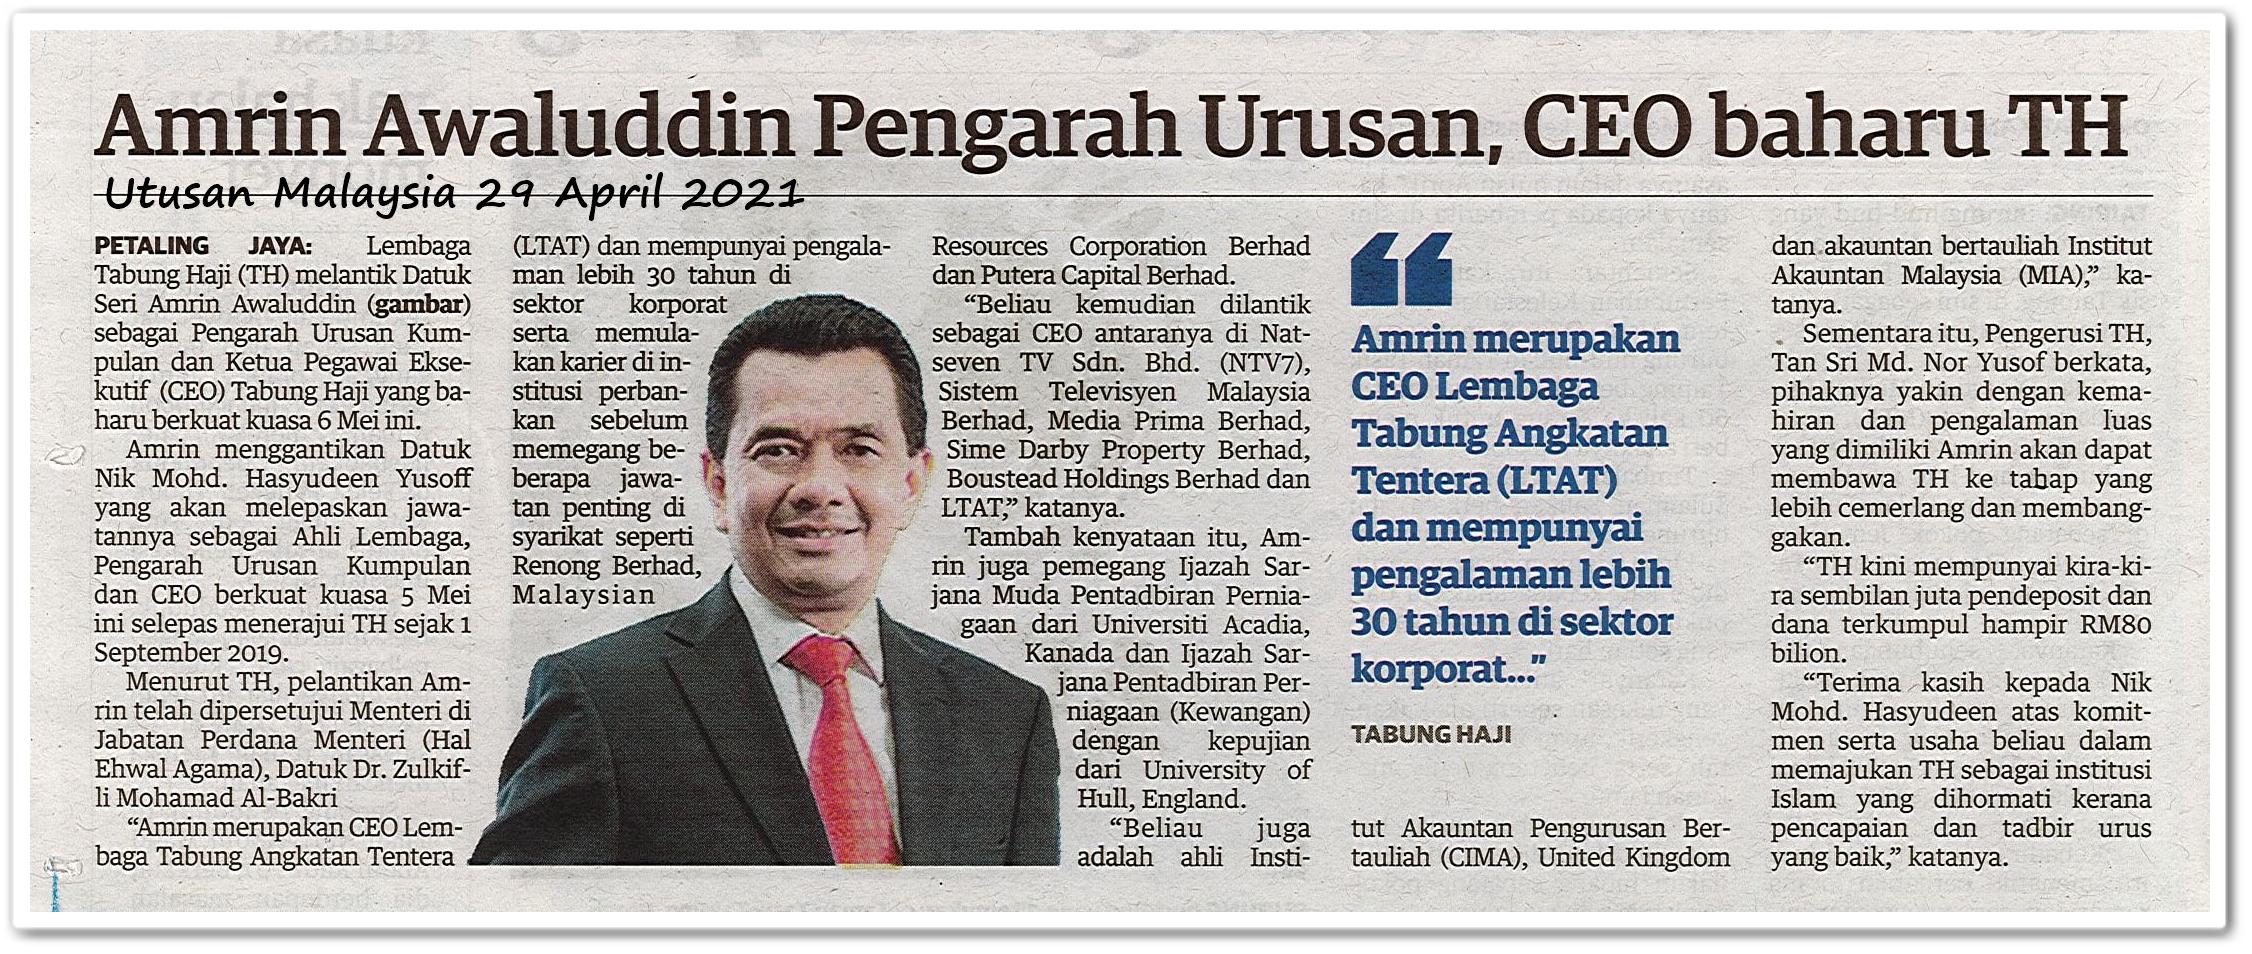 Amrin Awaluddin Pengarah Urusan, CEO baharu TH - Keratan akhbar Utusan Malaysia 29 April 2021